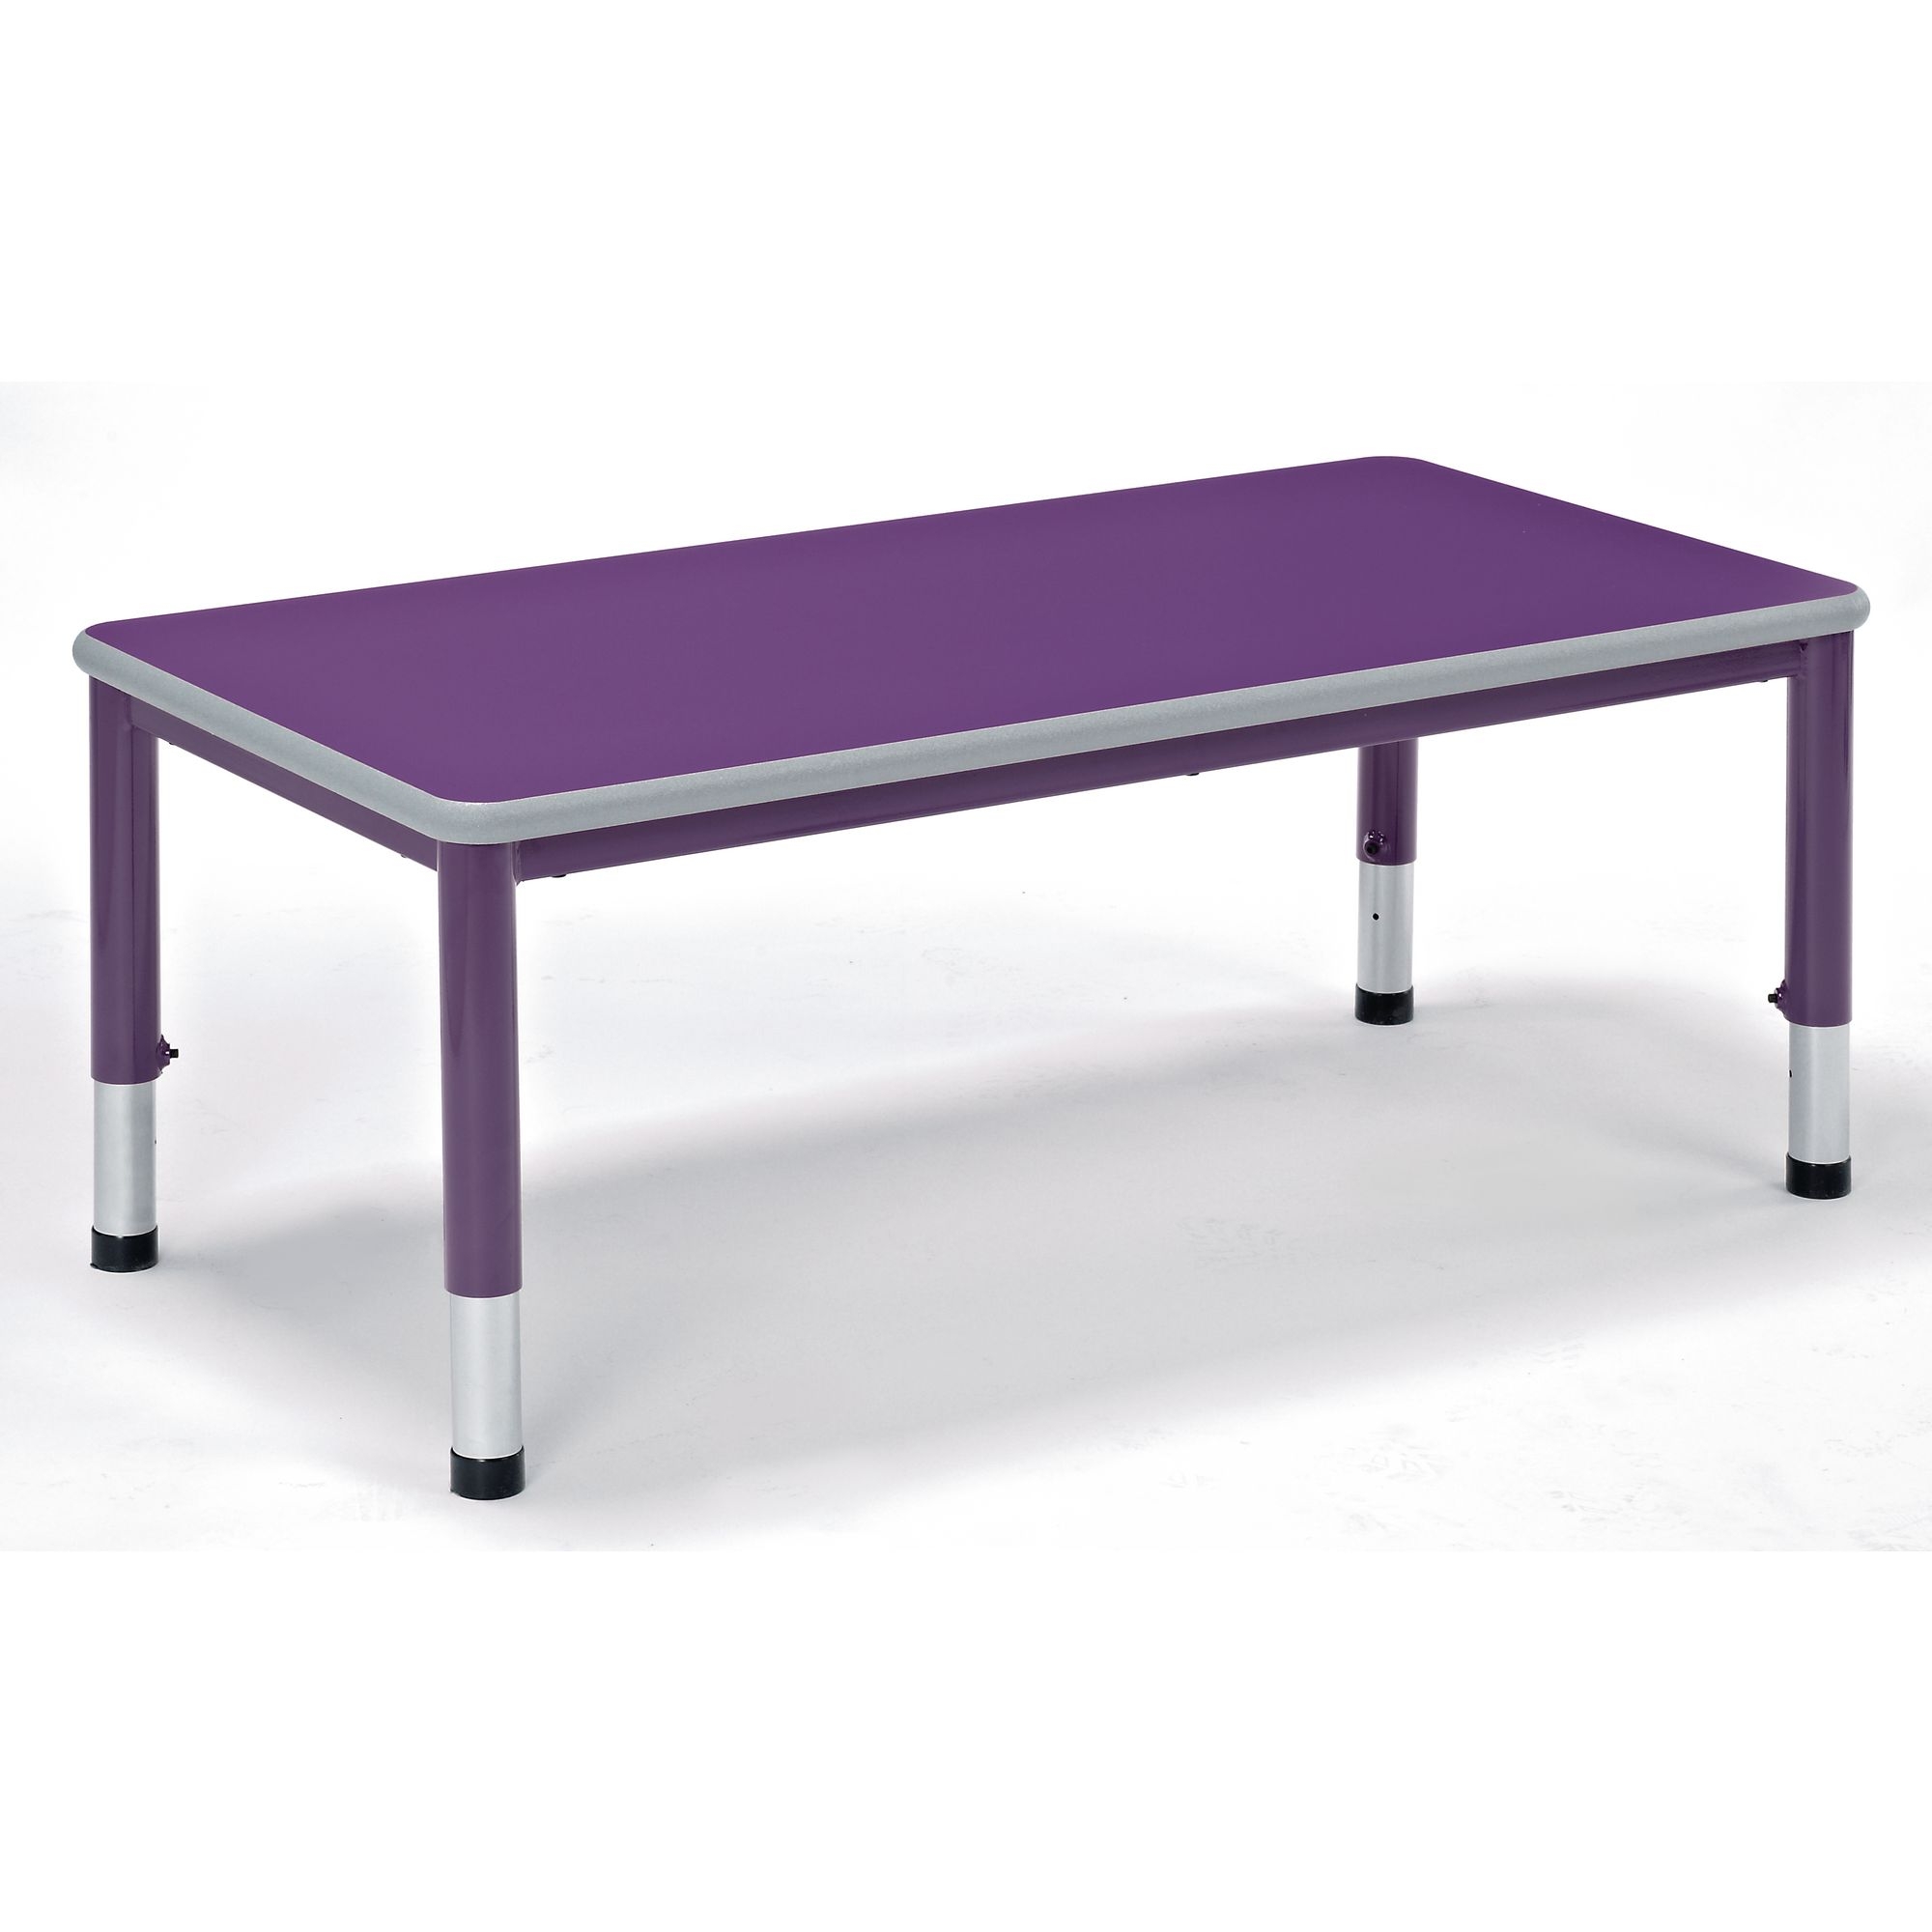 Harlequin Rectangular Height Adjustable Steel Classroom Table - 1200 x 600 x 600mm - White